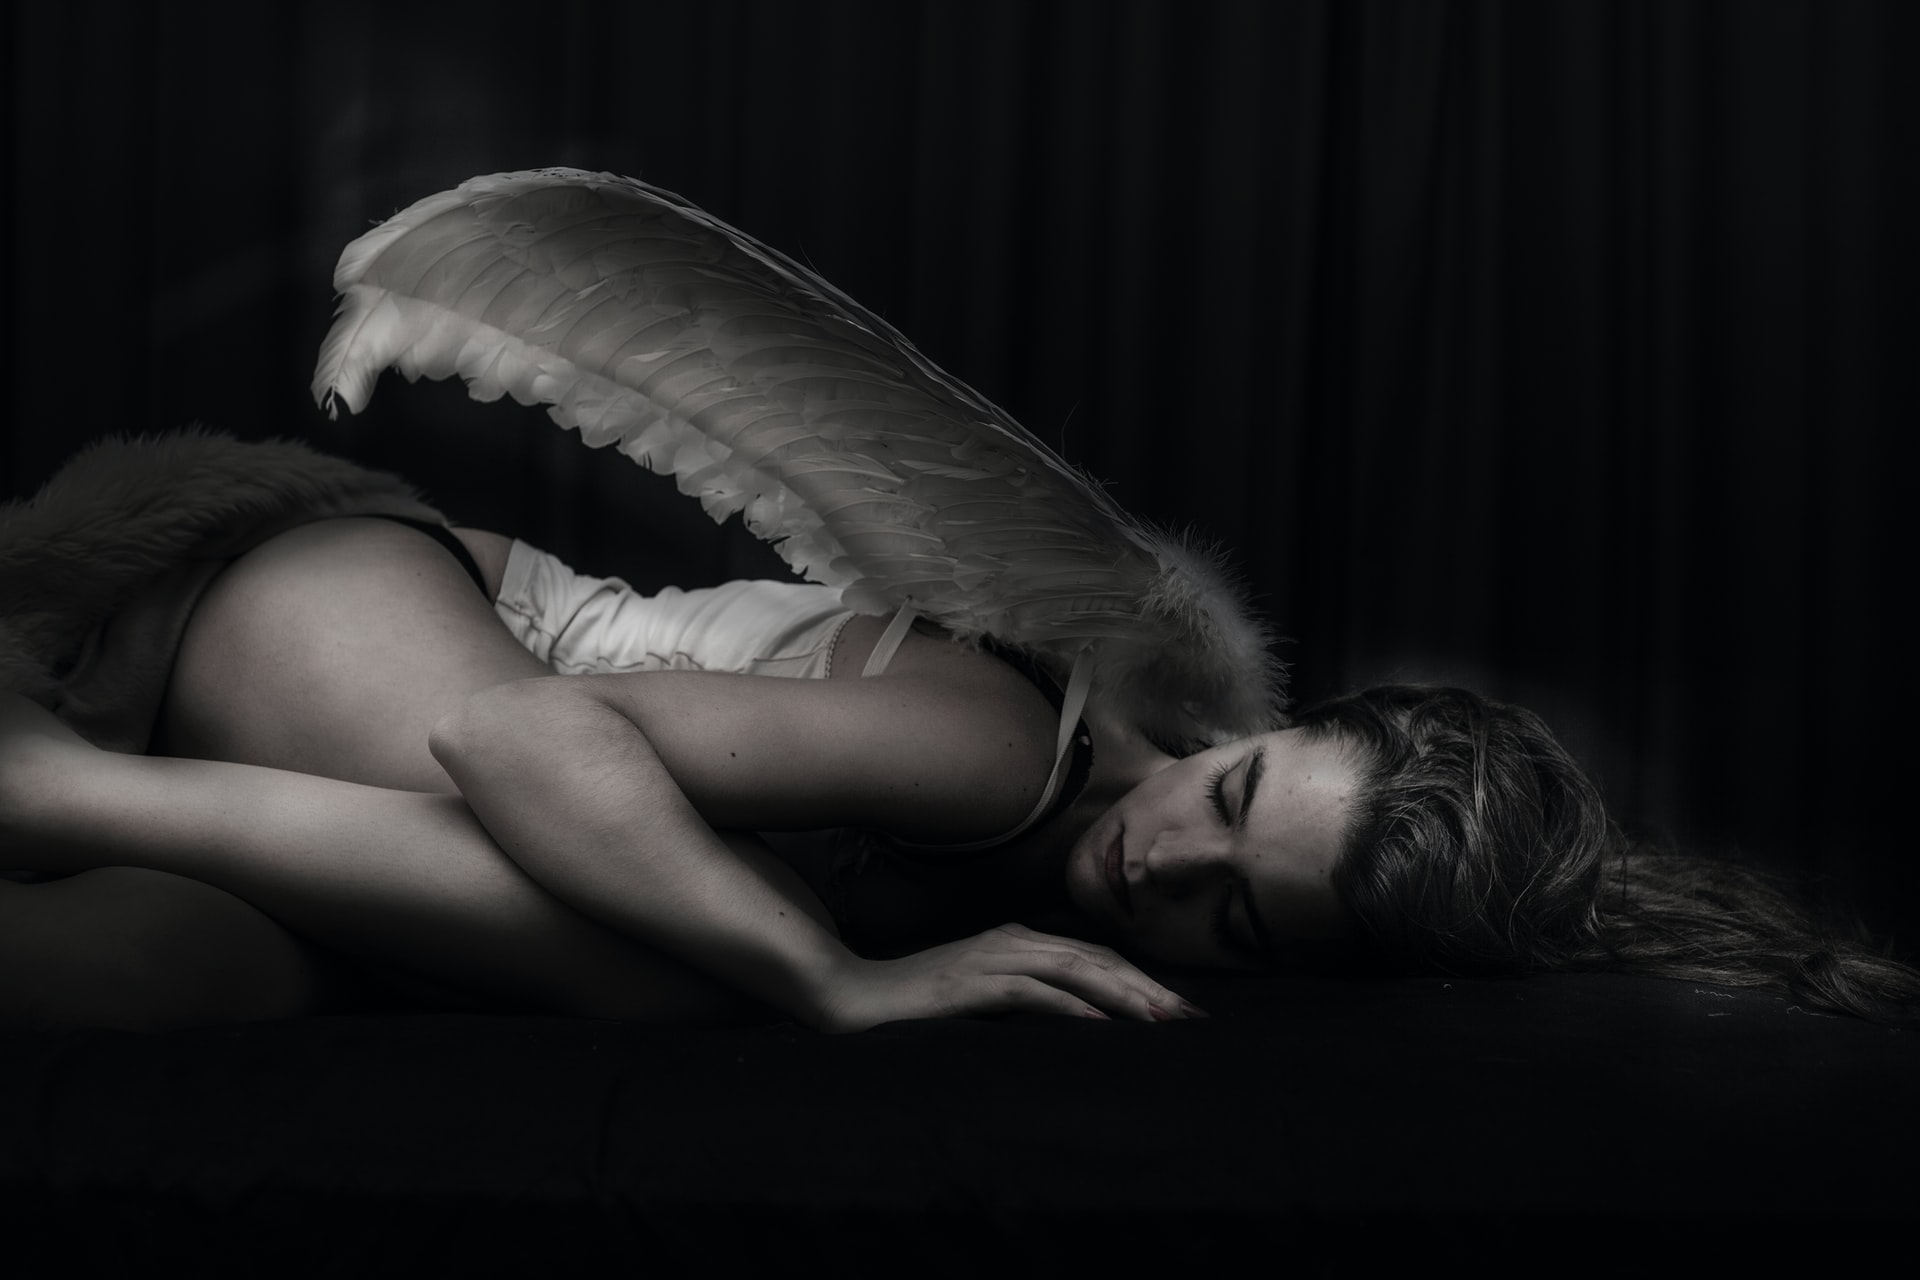 Women With Wings Lying In A Dark Room